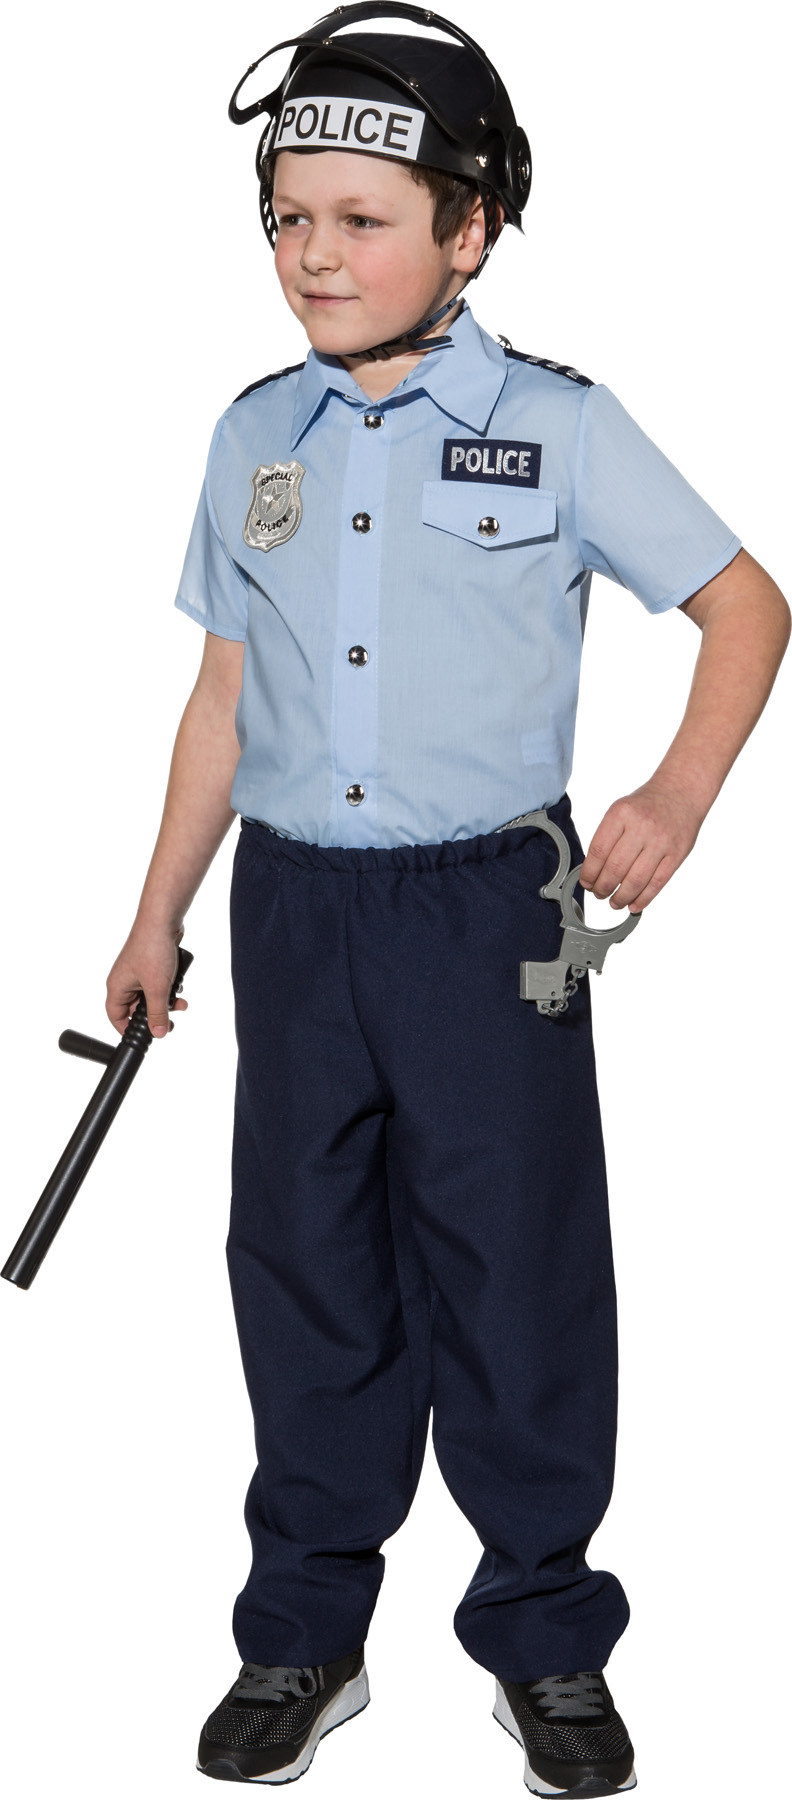 Police man 